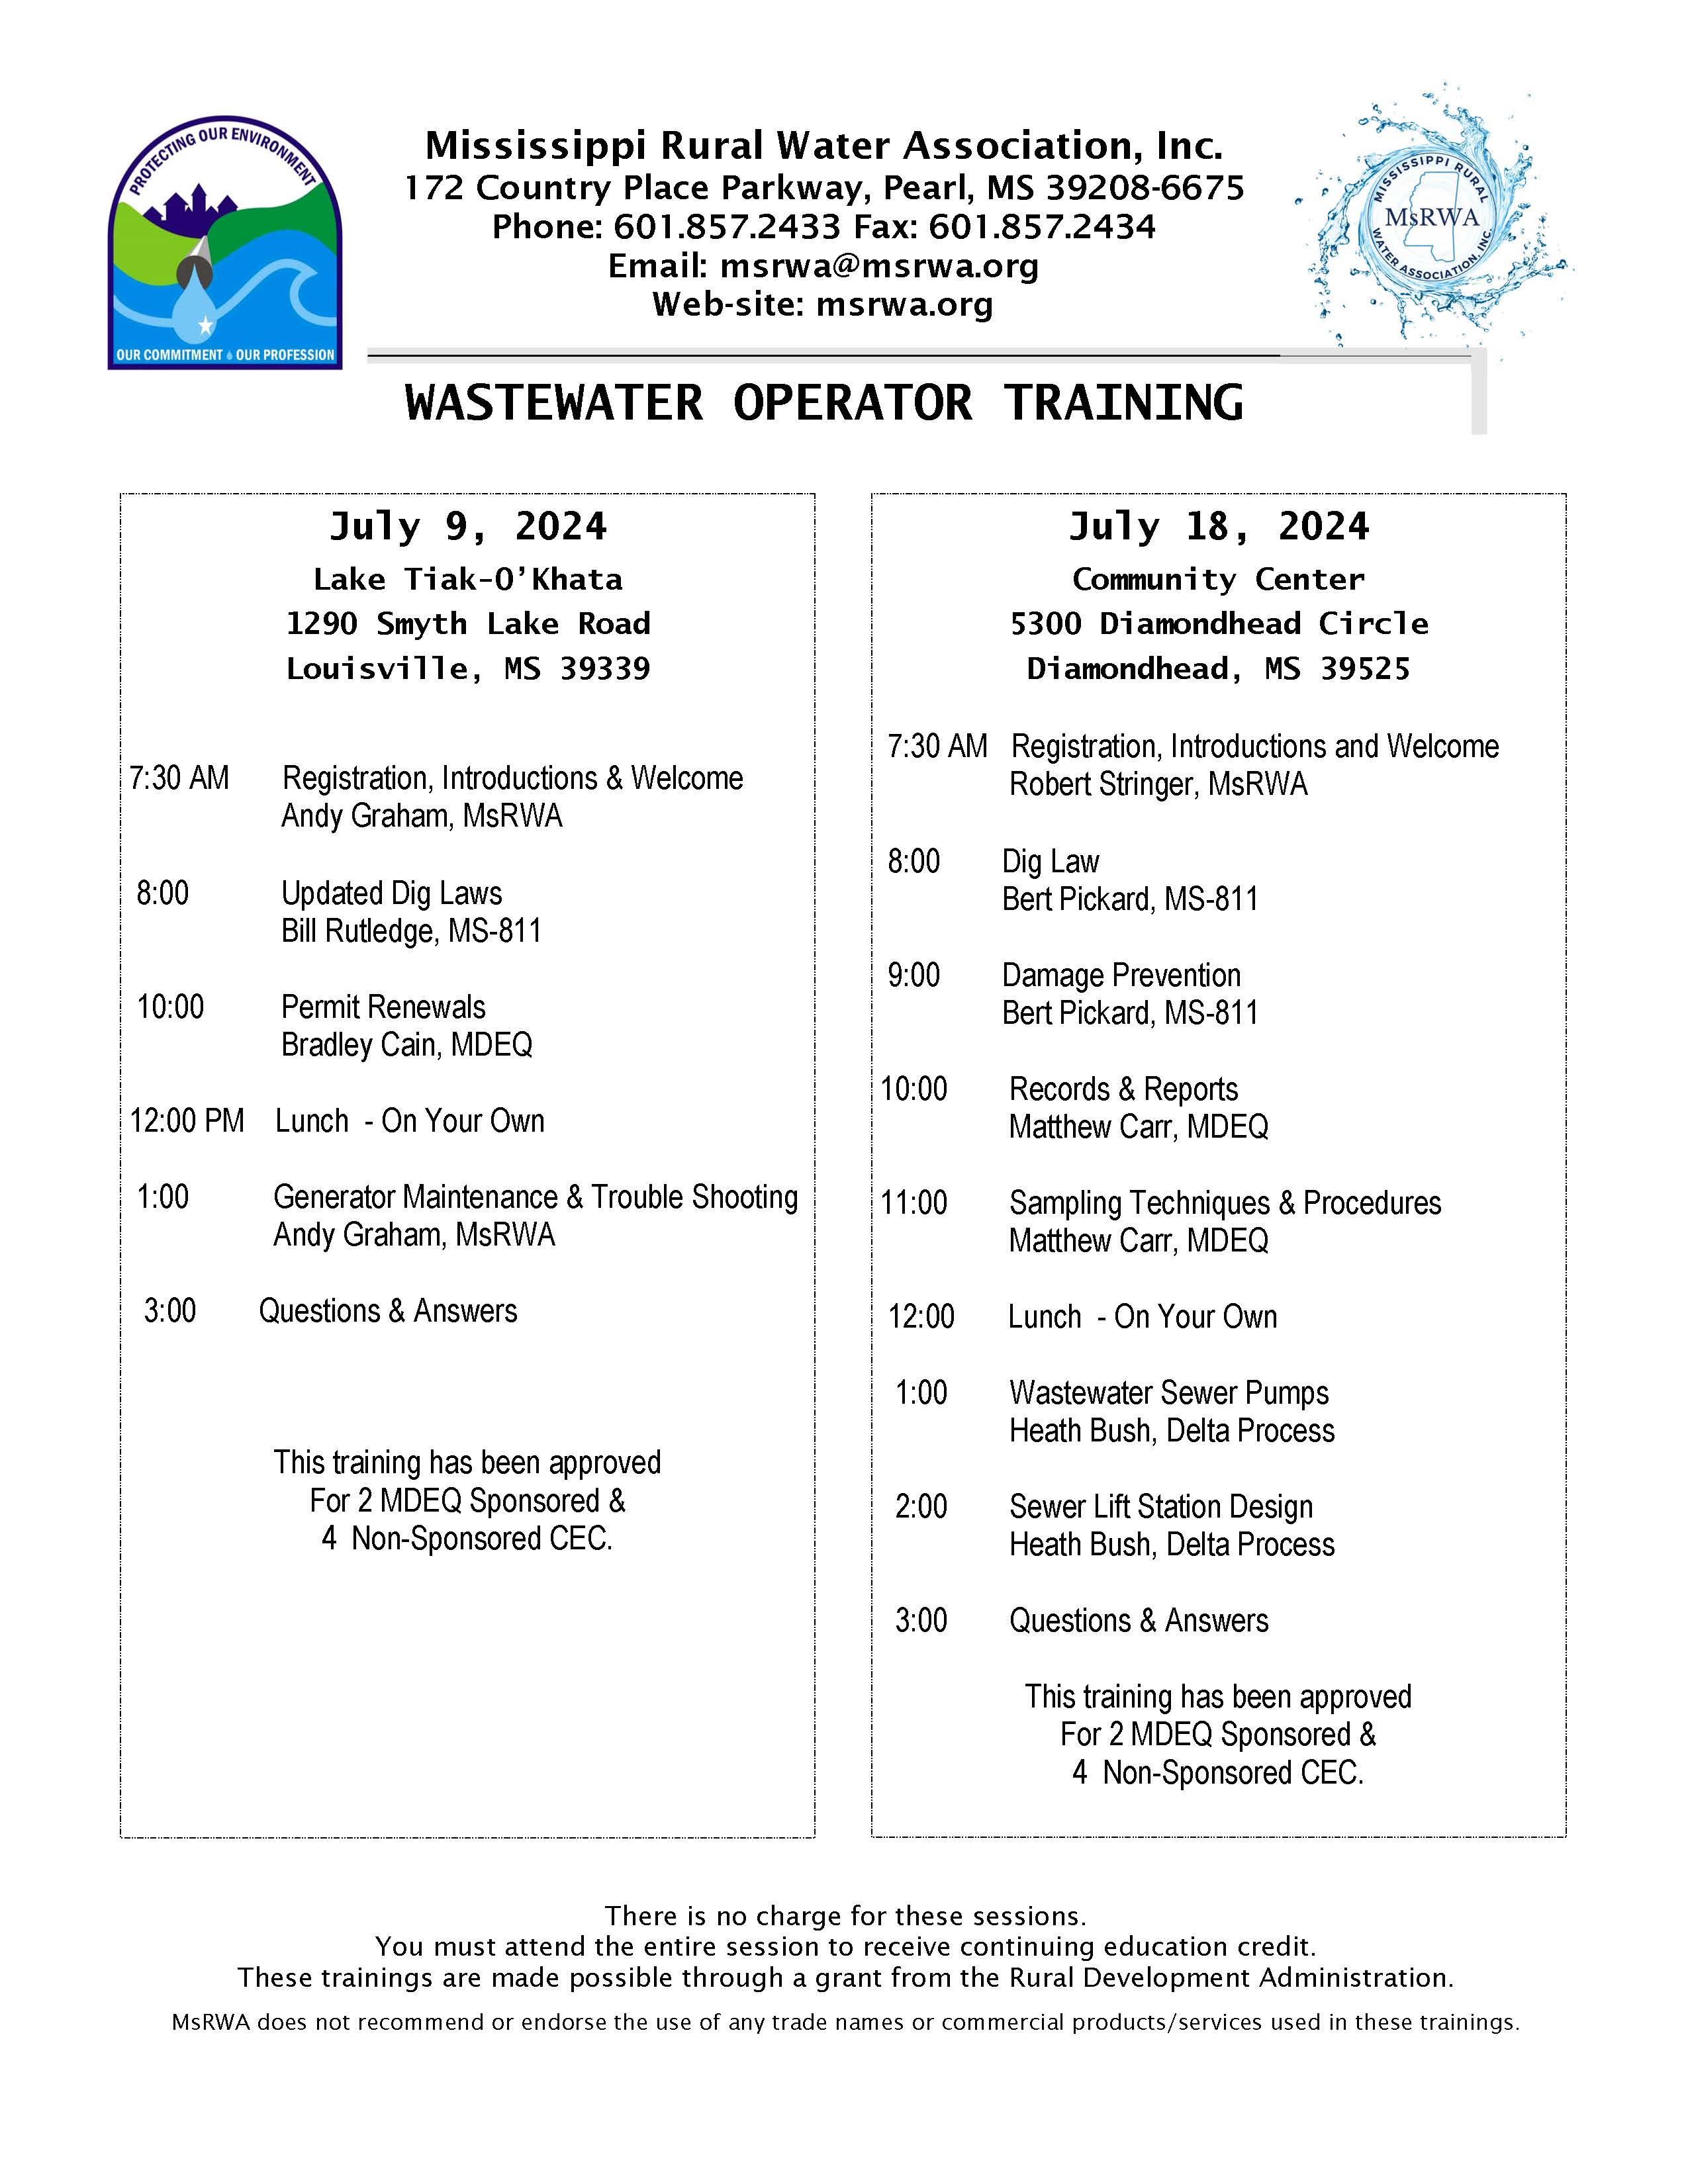 Wastewater Operator Training - 2S/4NS - Louisville @ Lake Tiak-O'Khata